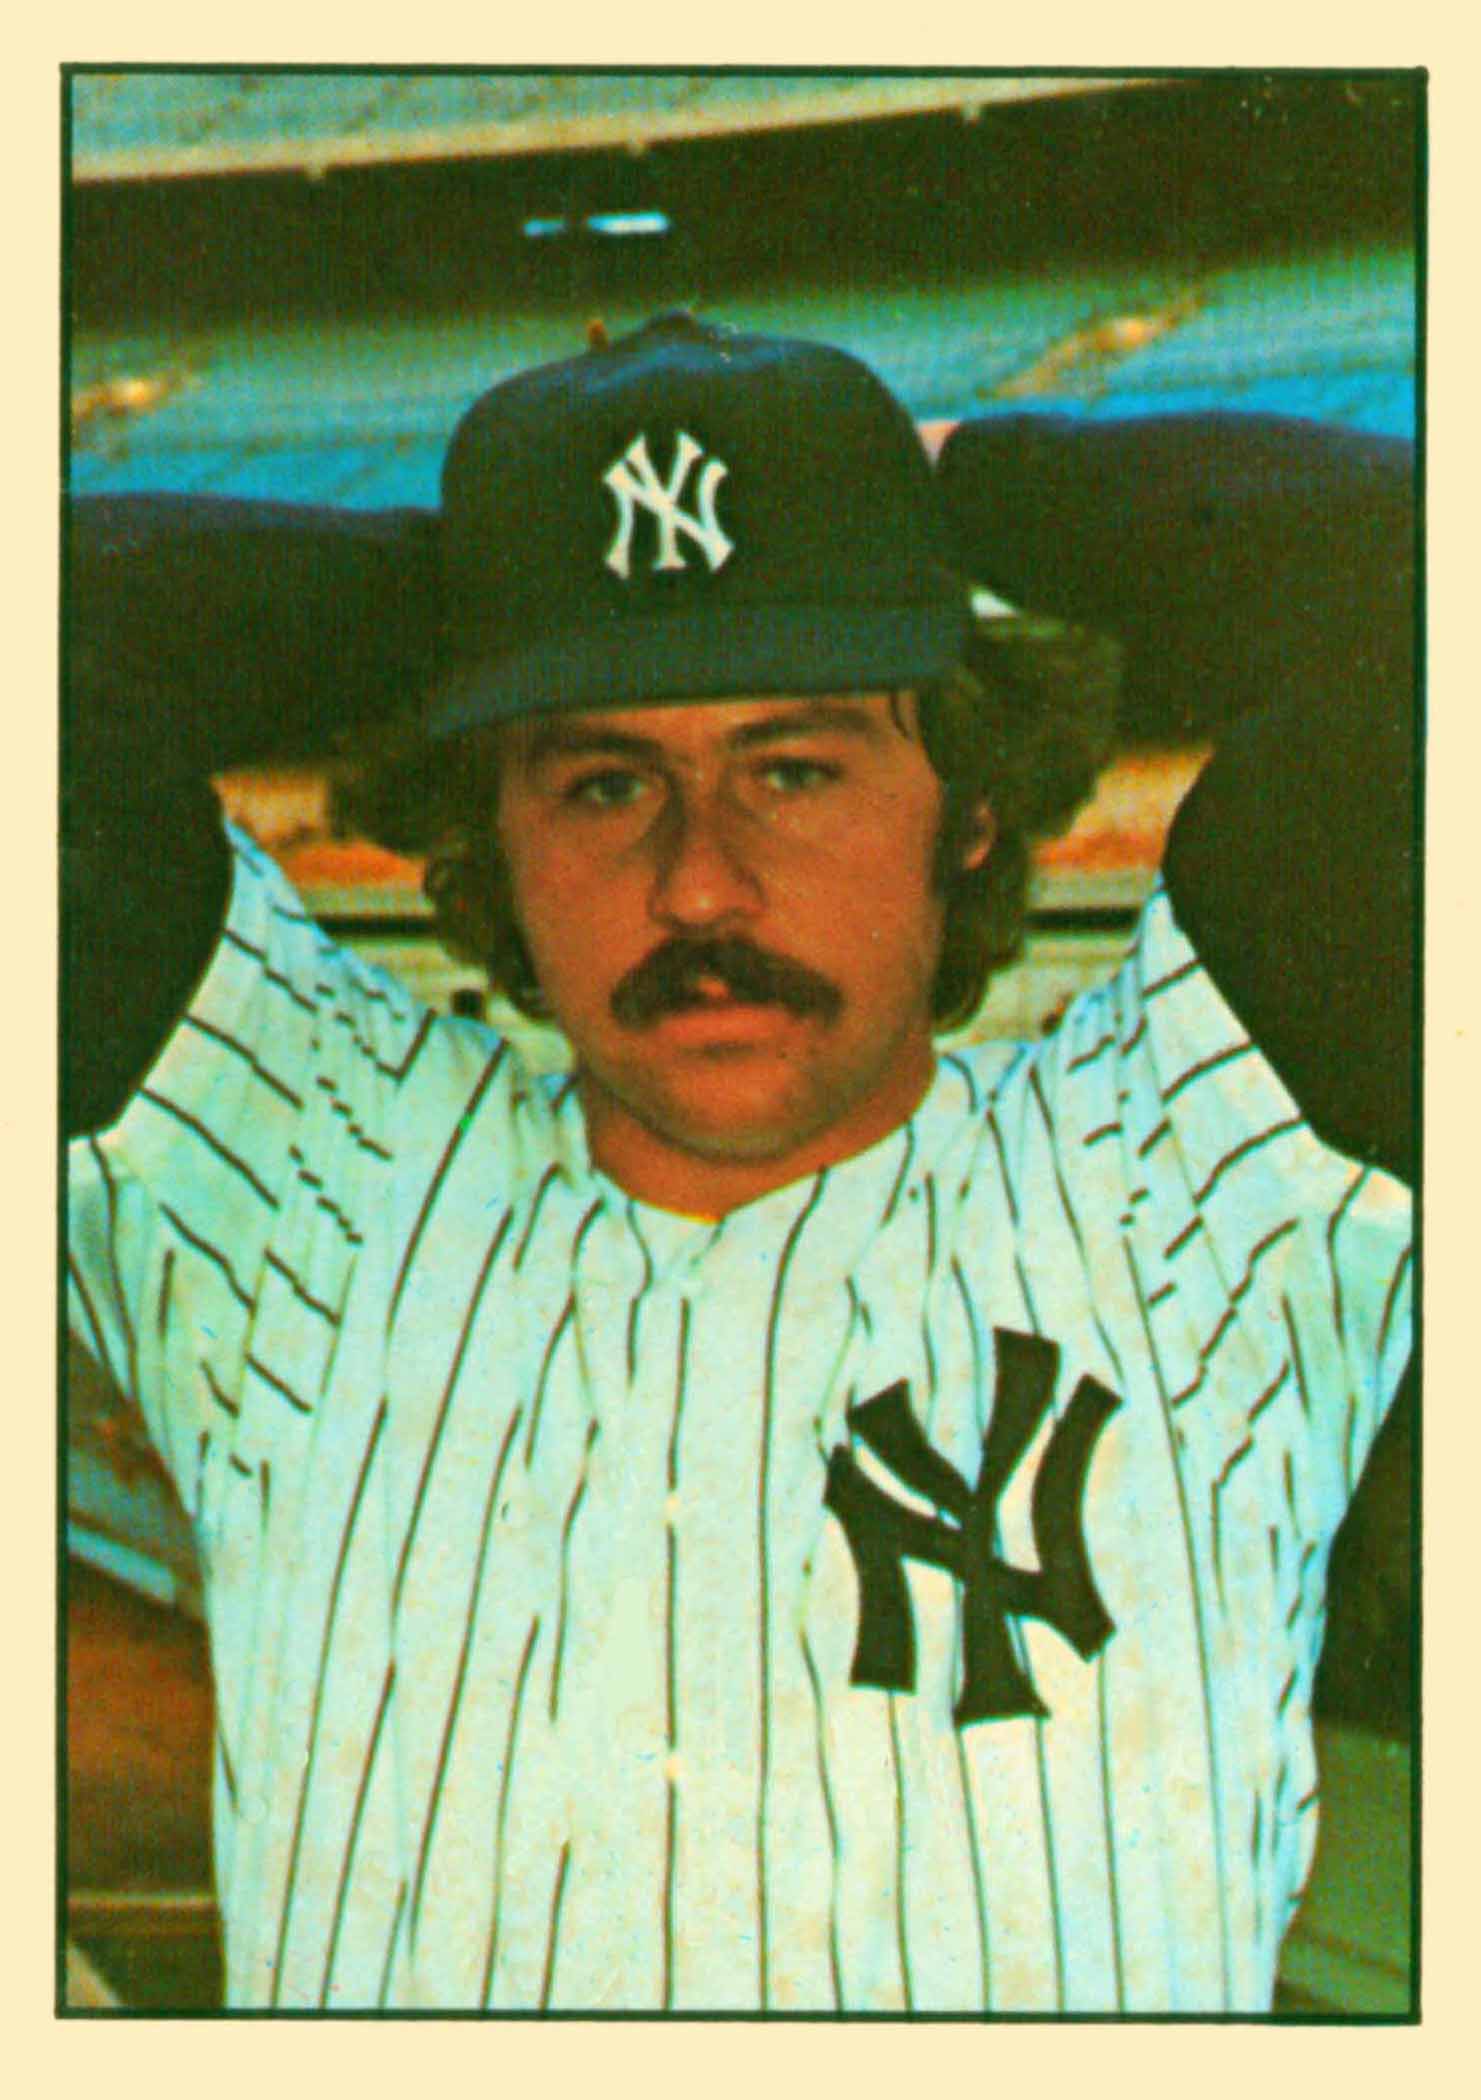 1975 Yankees SSPC